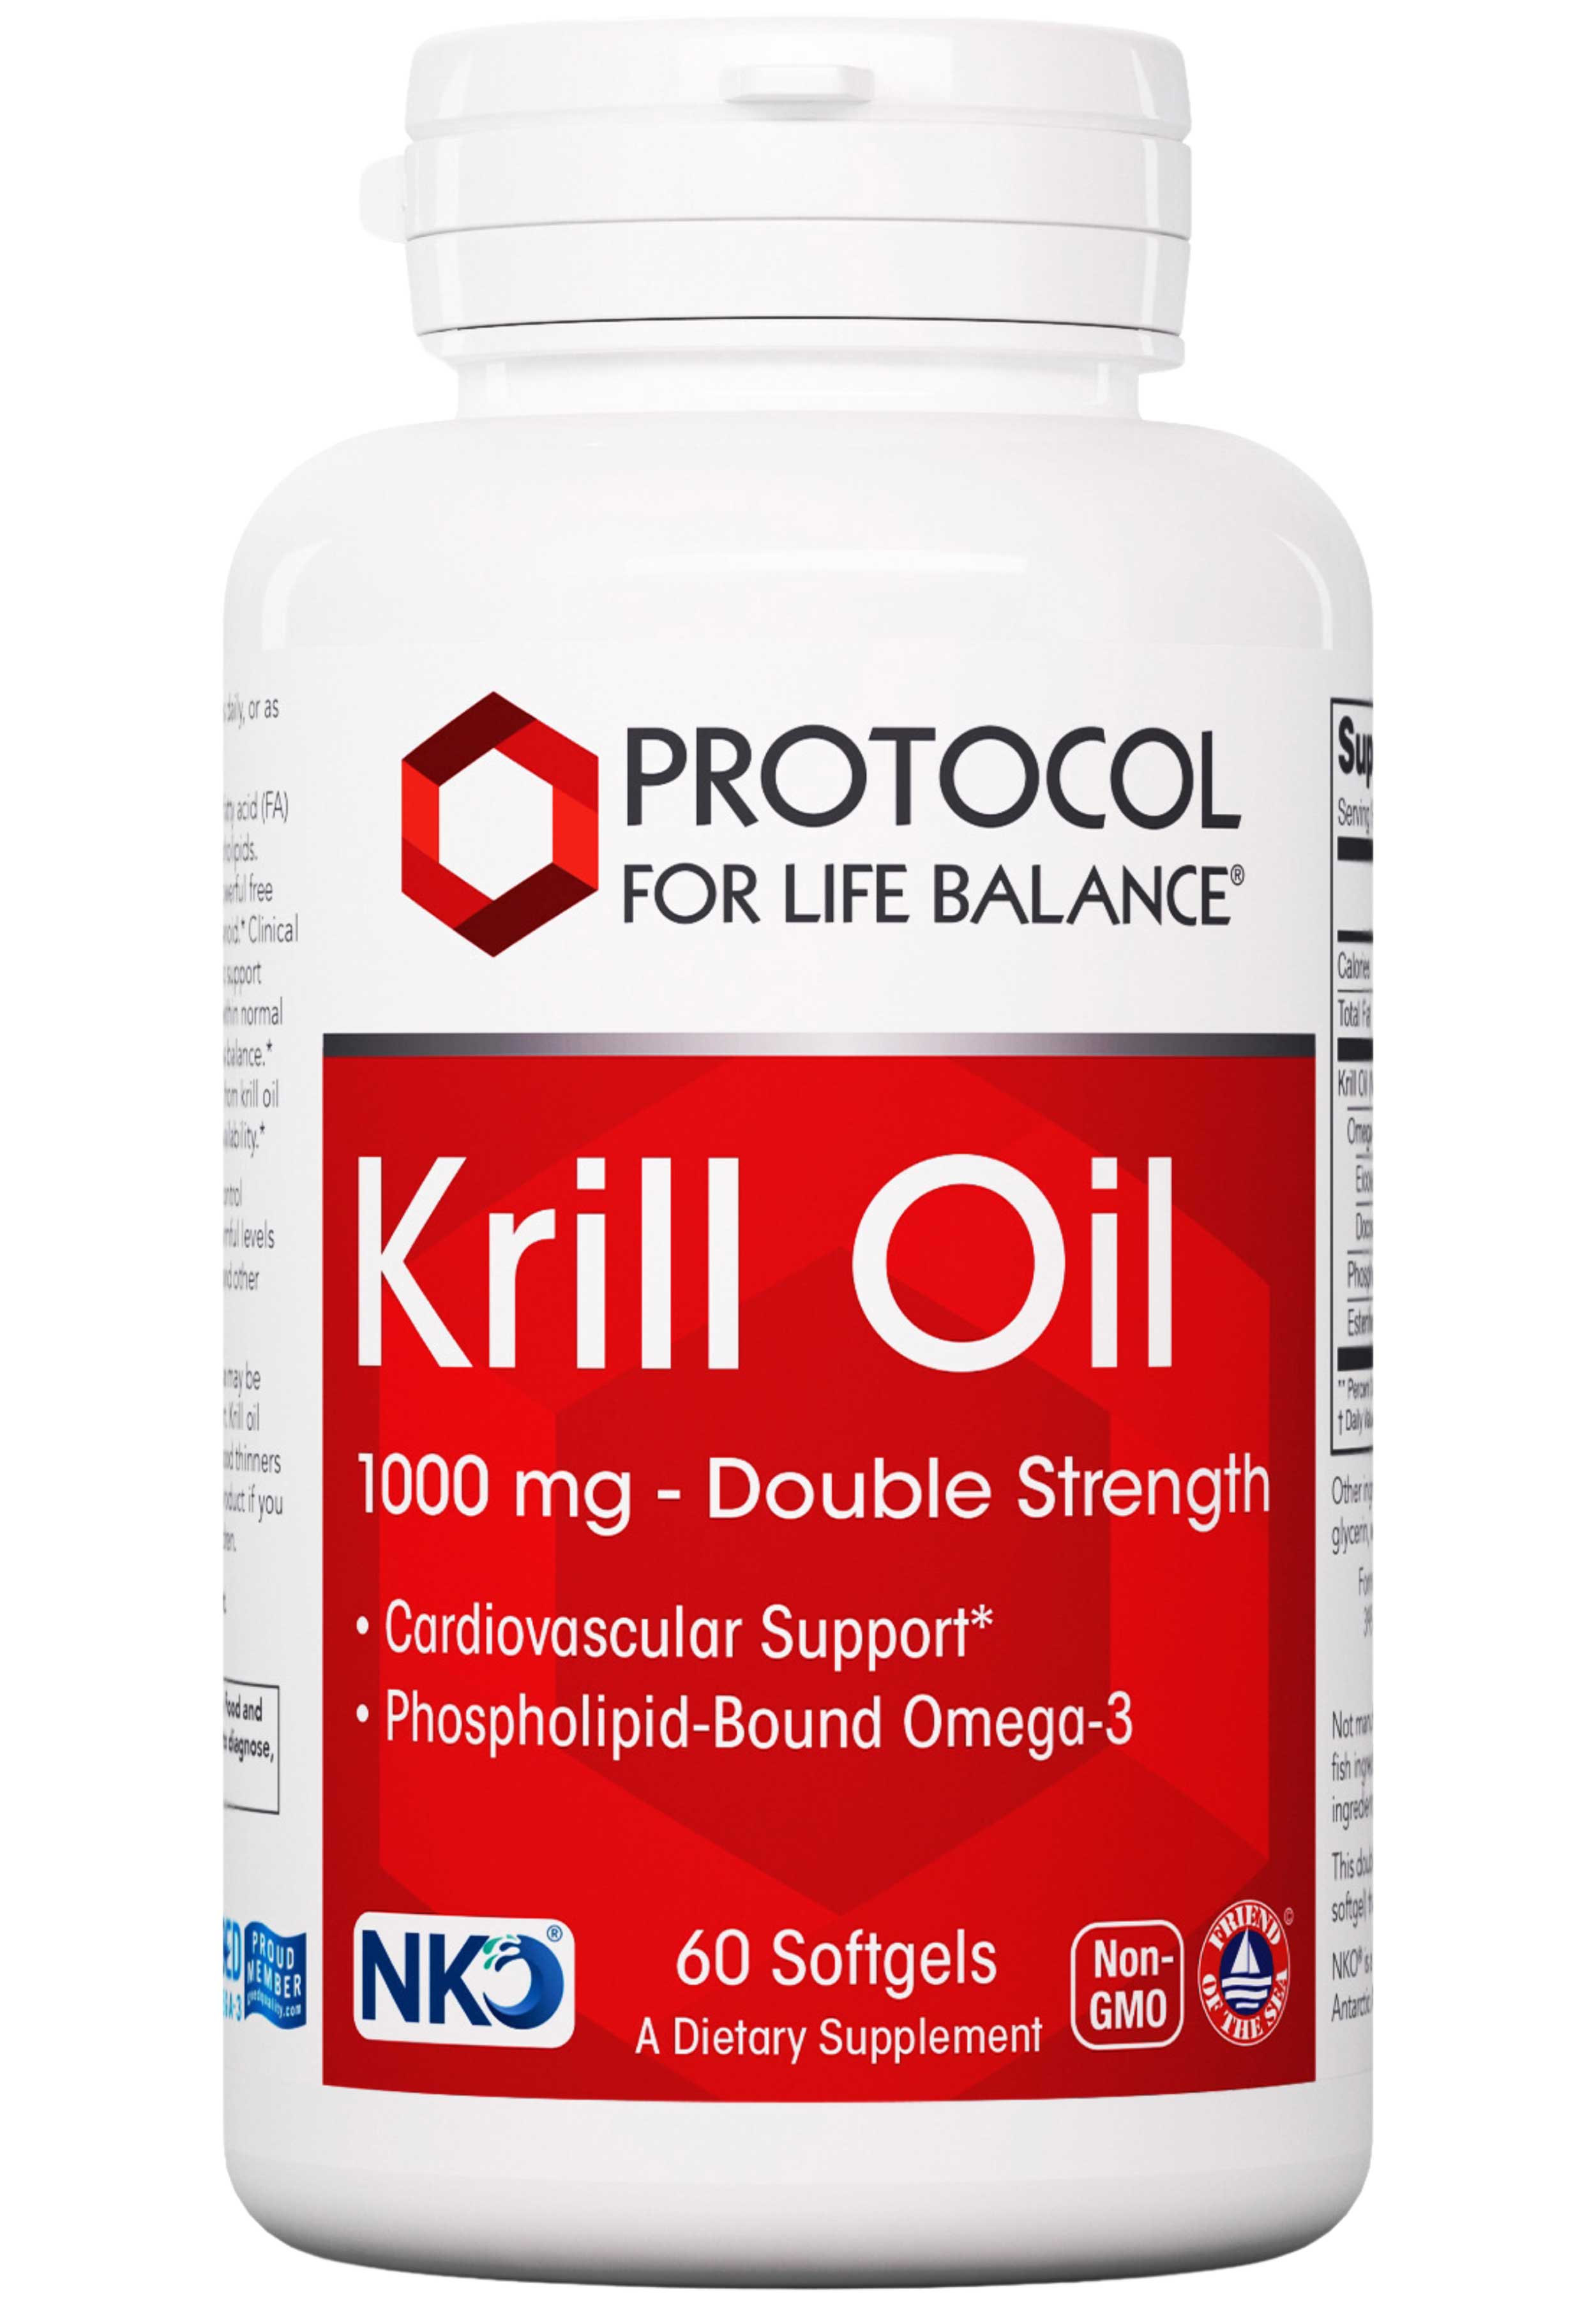 Protocol for Life Balance Krill Oil 1,000 mg - Double Strength